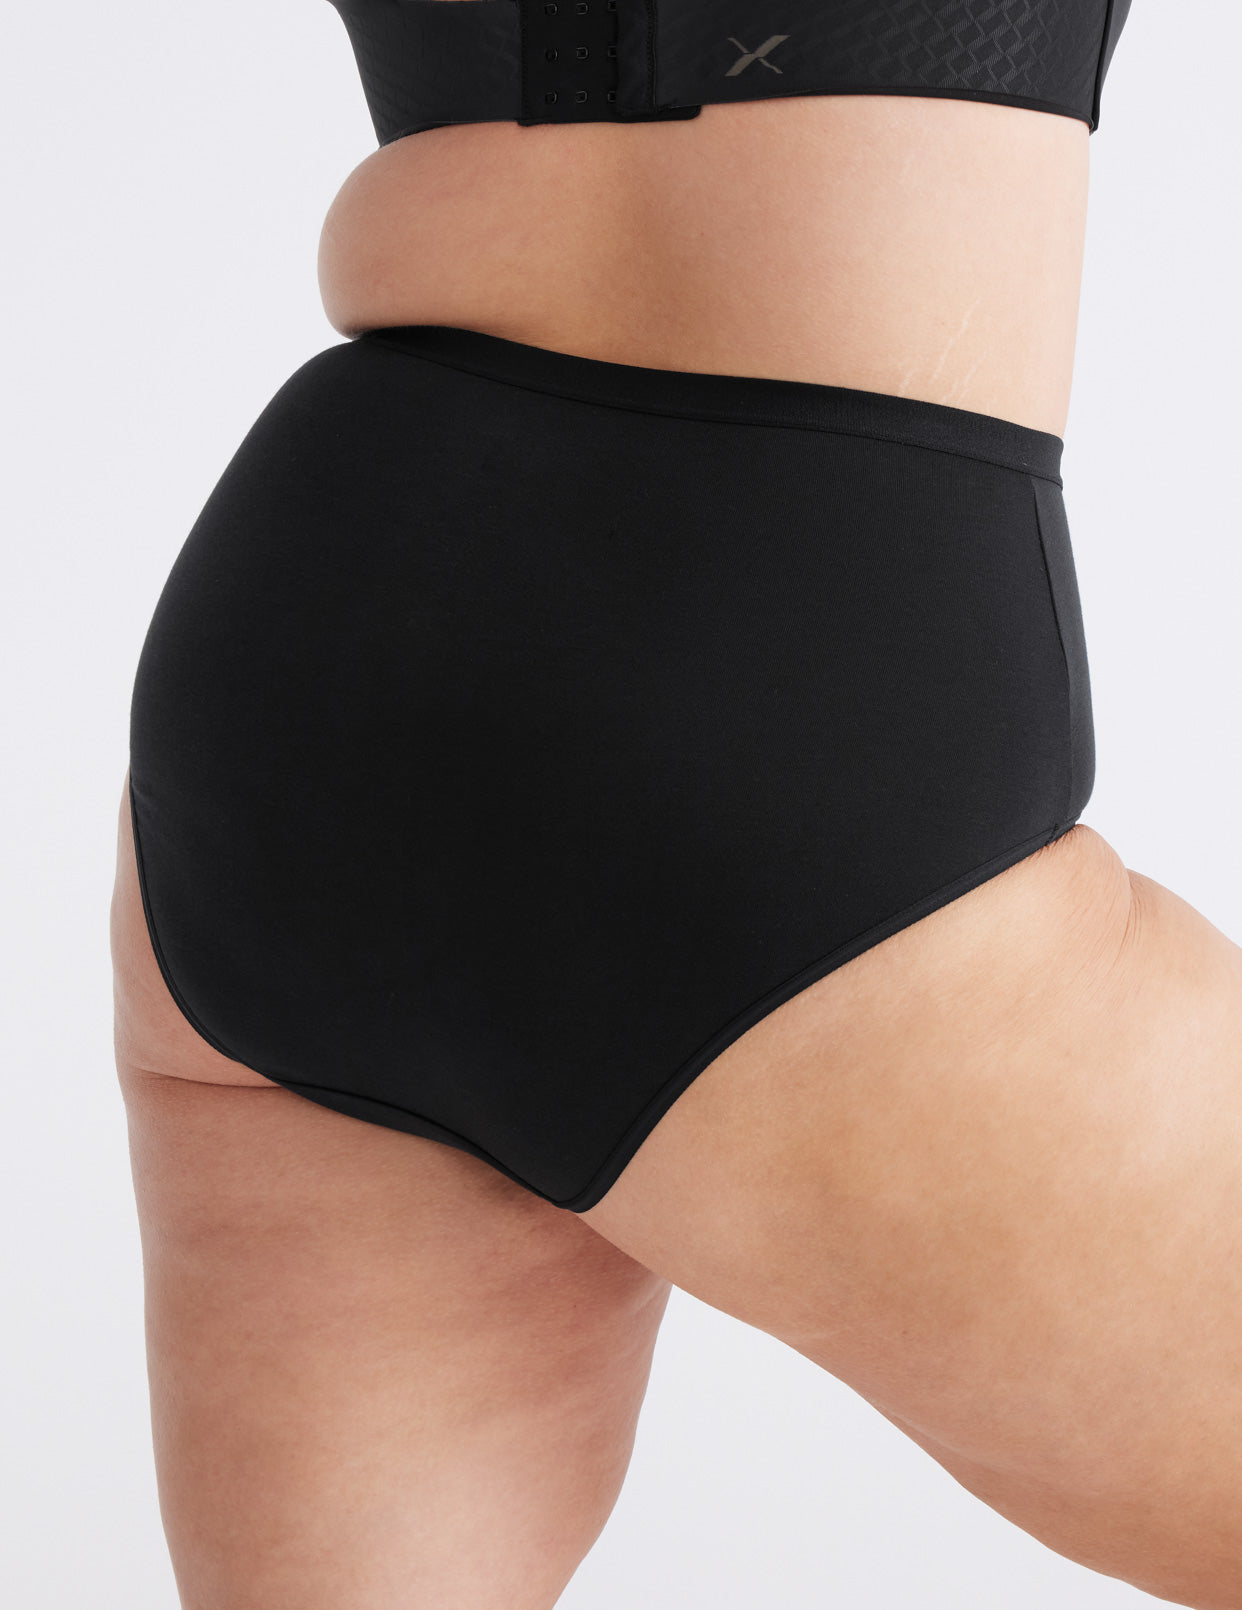 freestylehome Women's Underwear Set Bra Panty Sets Classic Bowknot